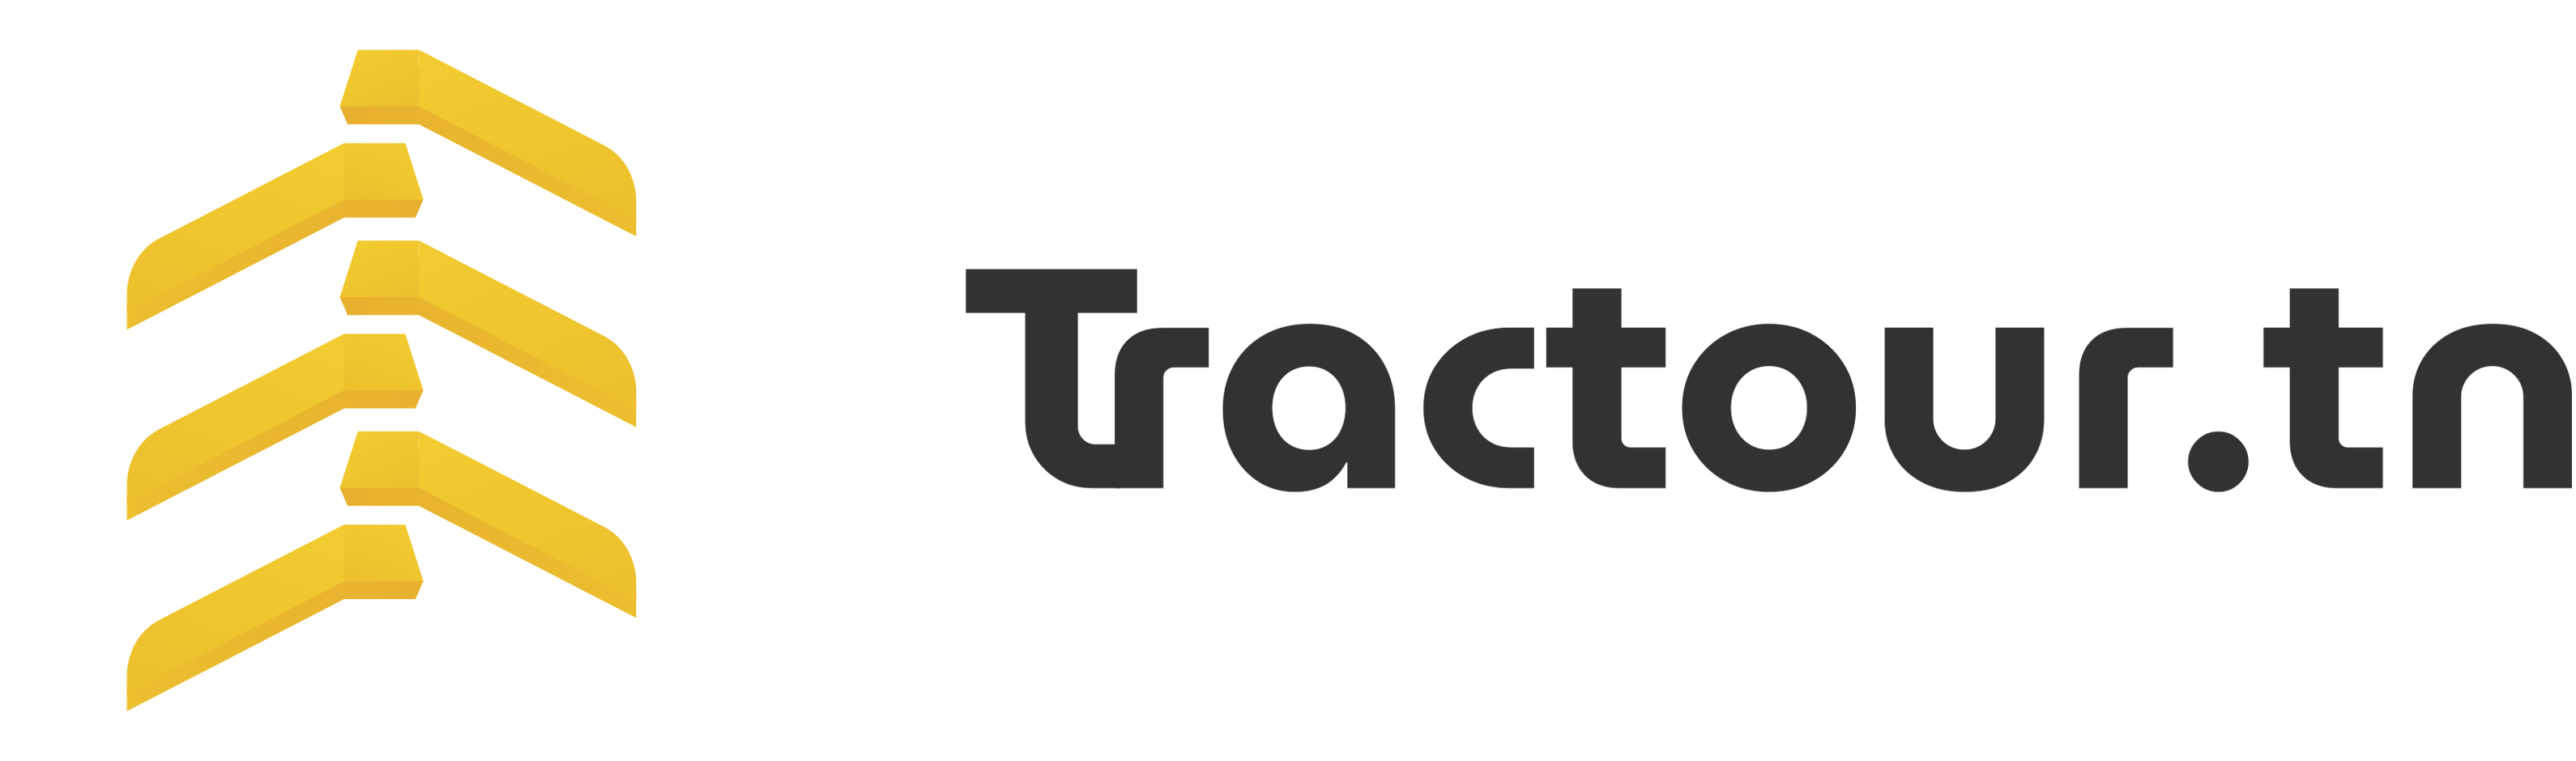 Logo de www.tractour.tn vente tracteur Tunisie